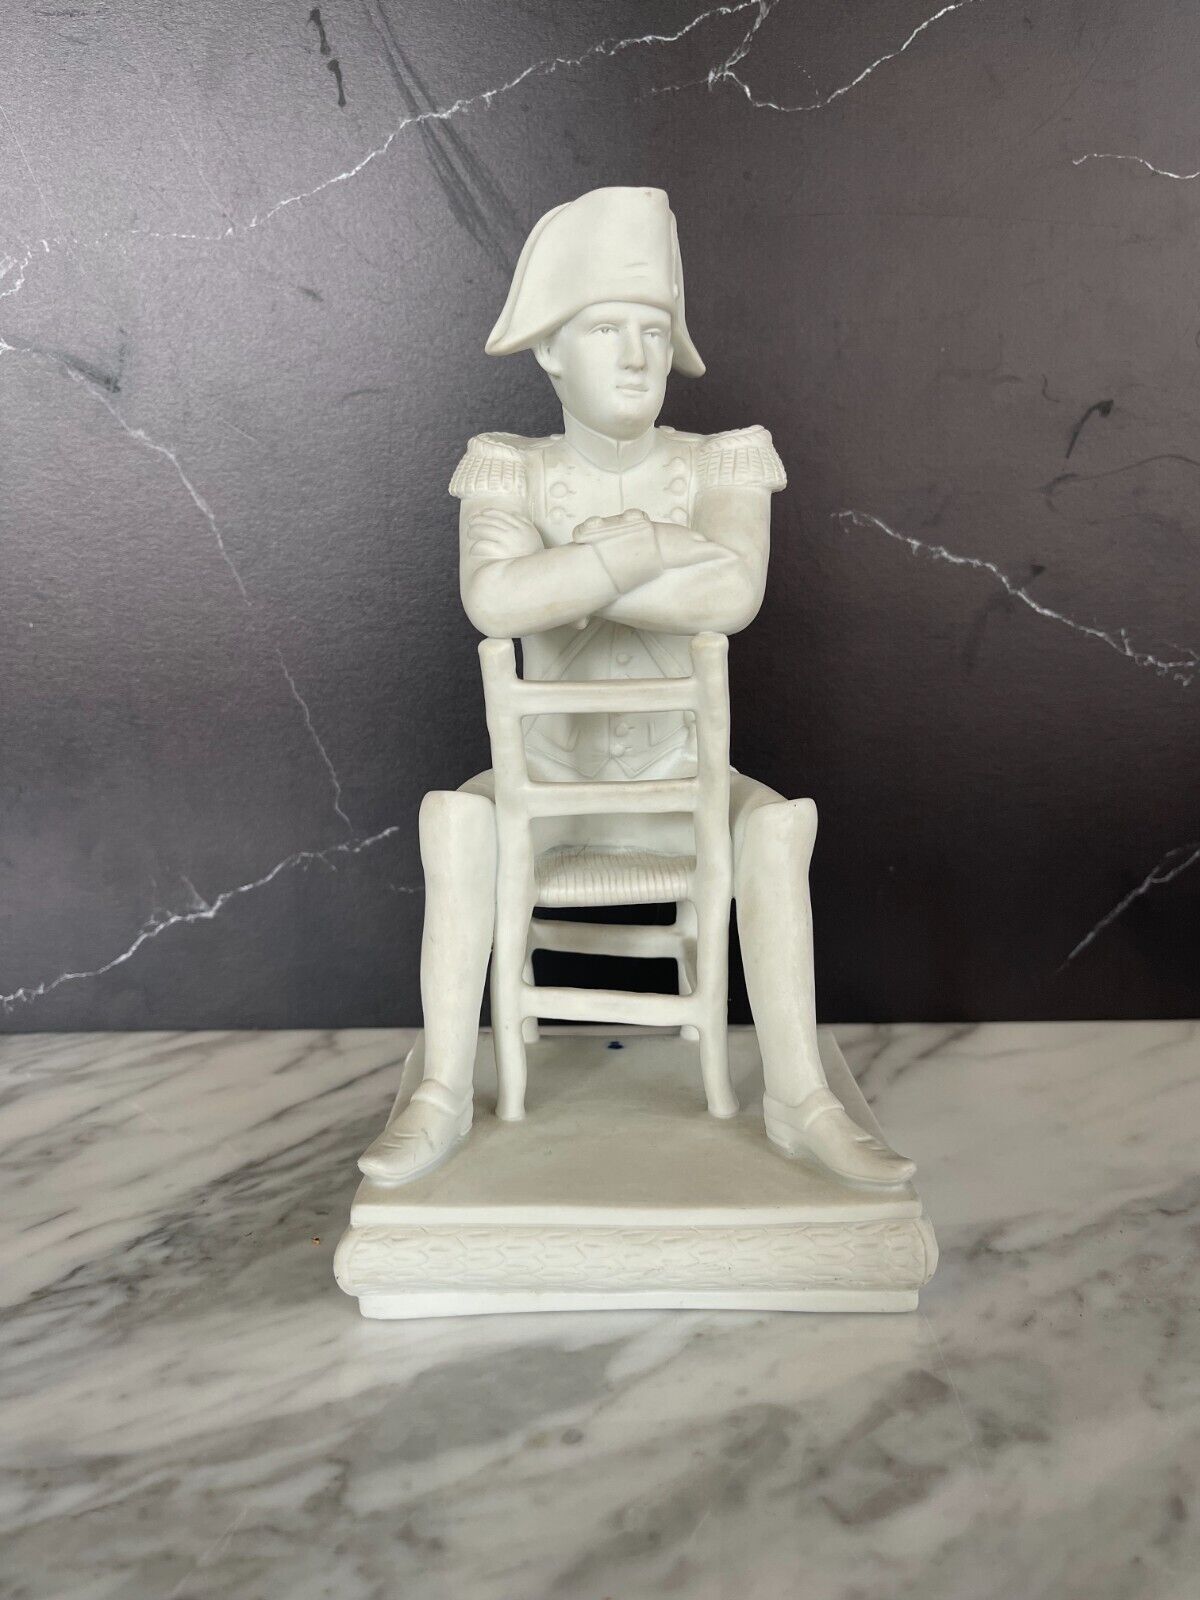 Antique French White Porcelain Bisque Statue of Napoleon Bonaparte Seated